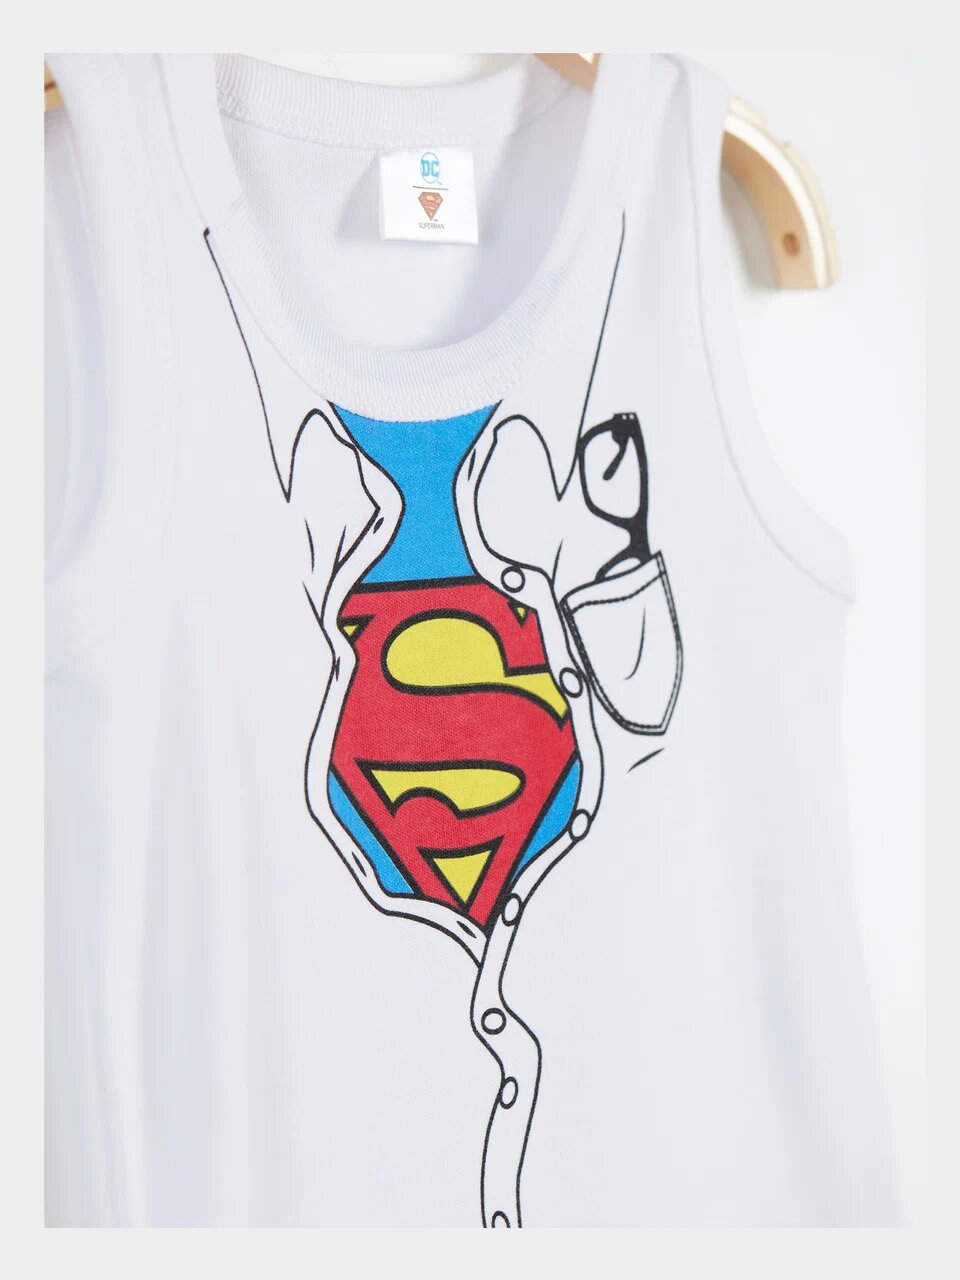 Disney Superman Bodysuits - 2 Pack